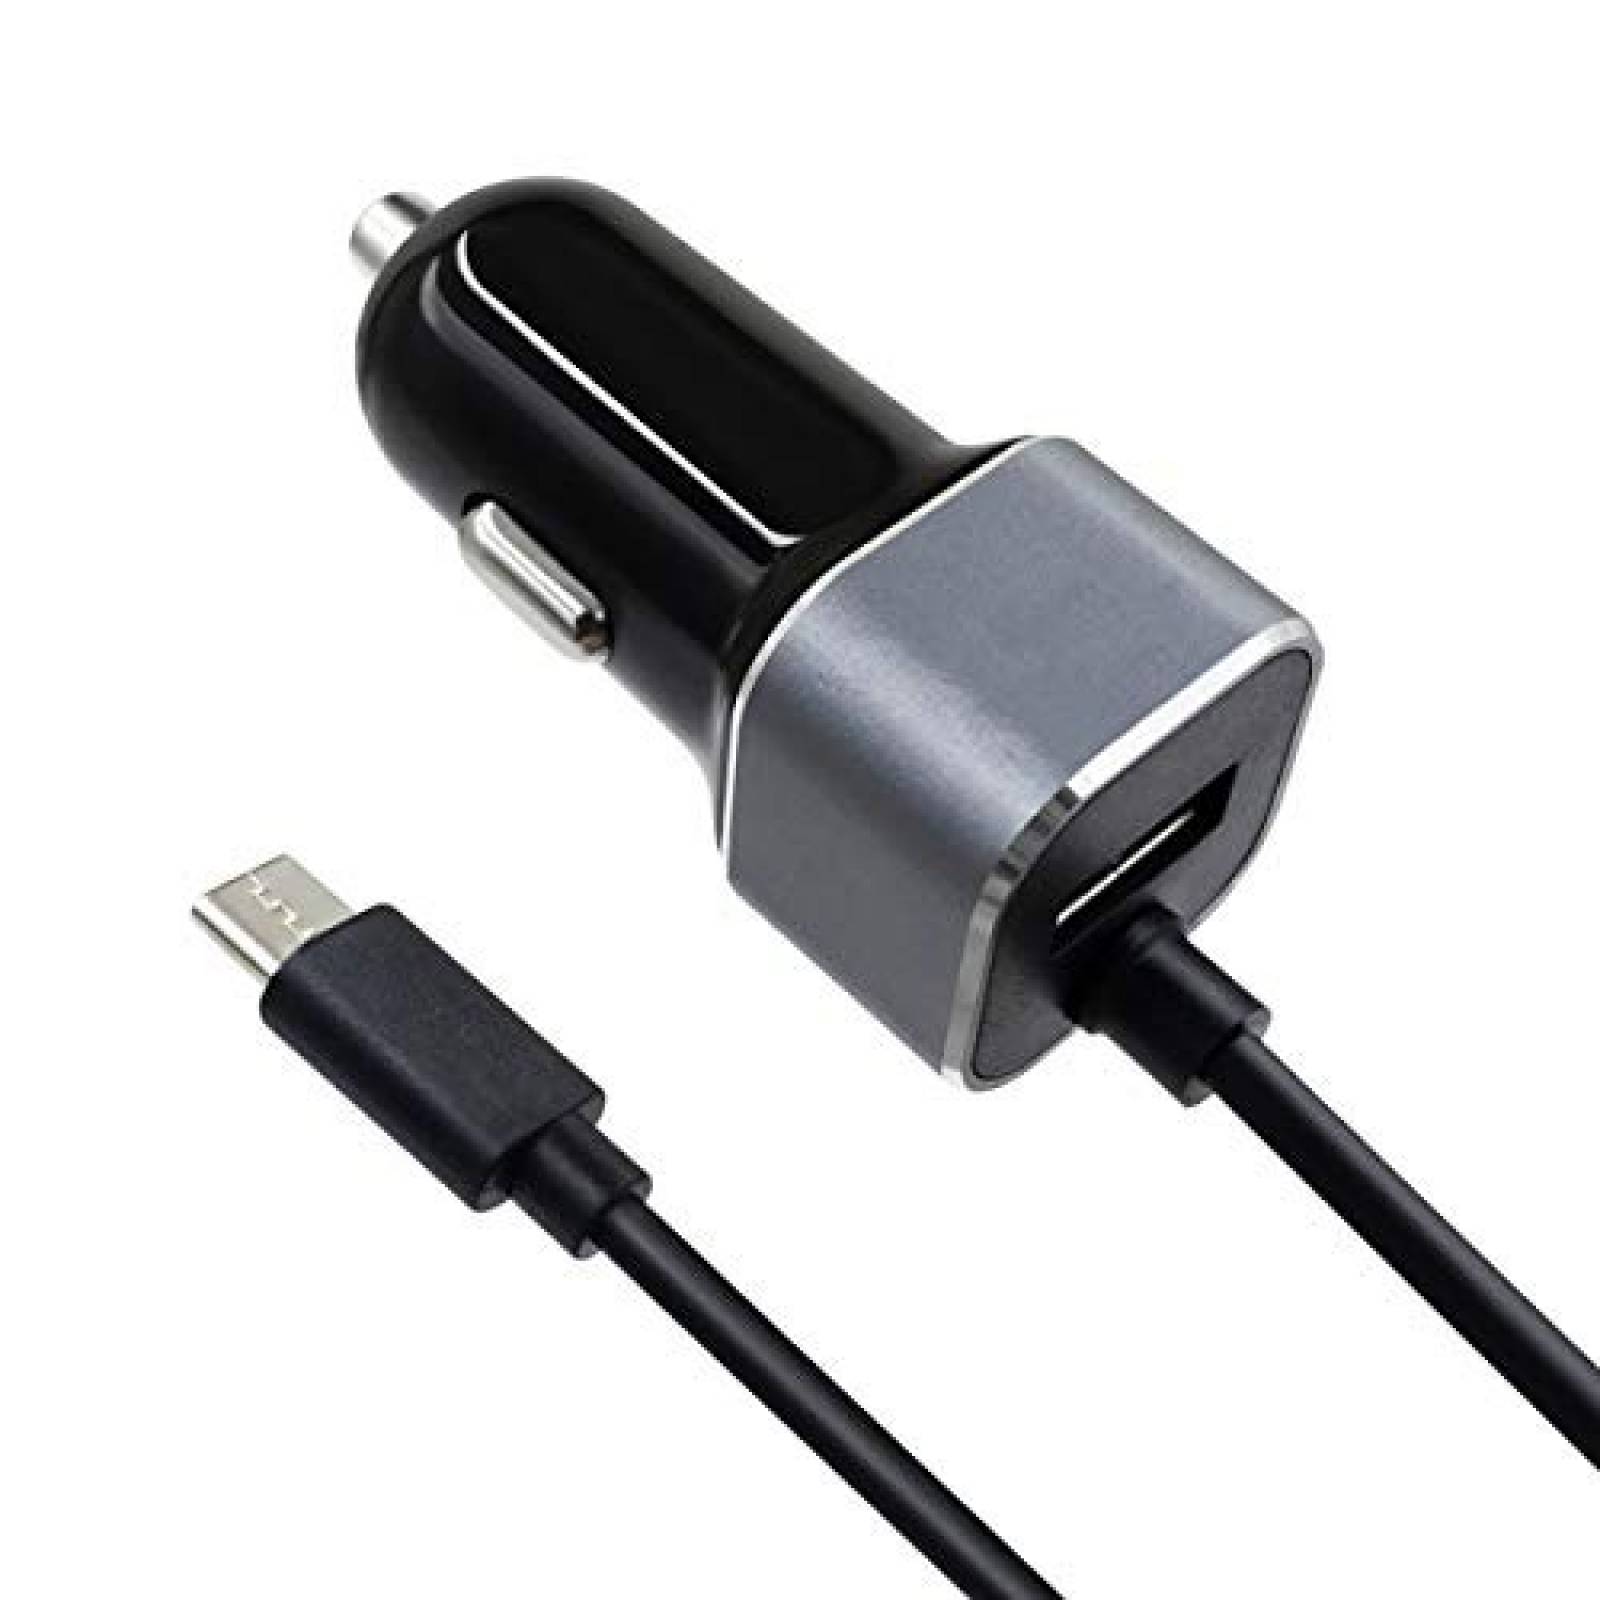 Cargador pdobq USB C Adpatador para Auto Switch Power -Negro